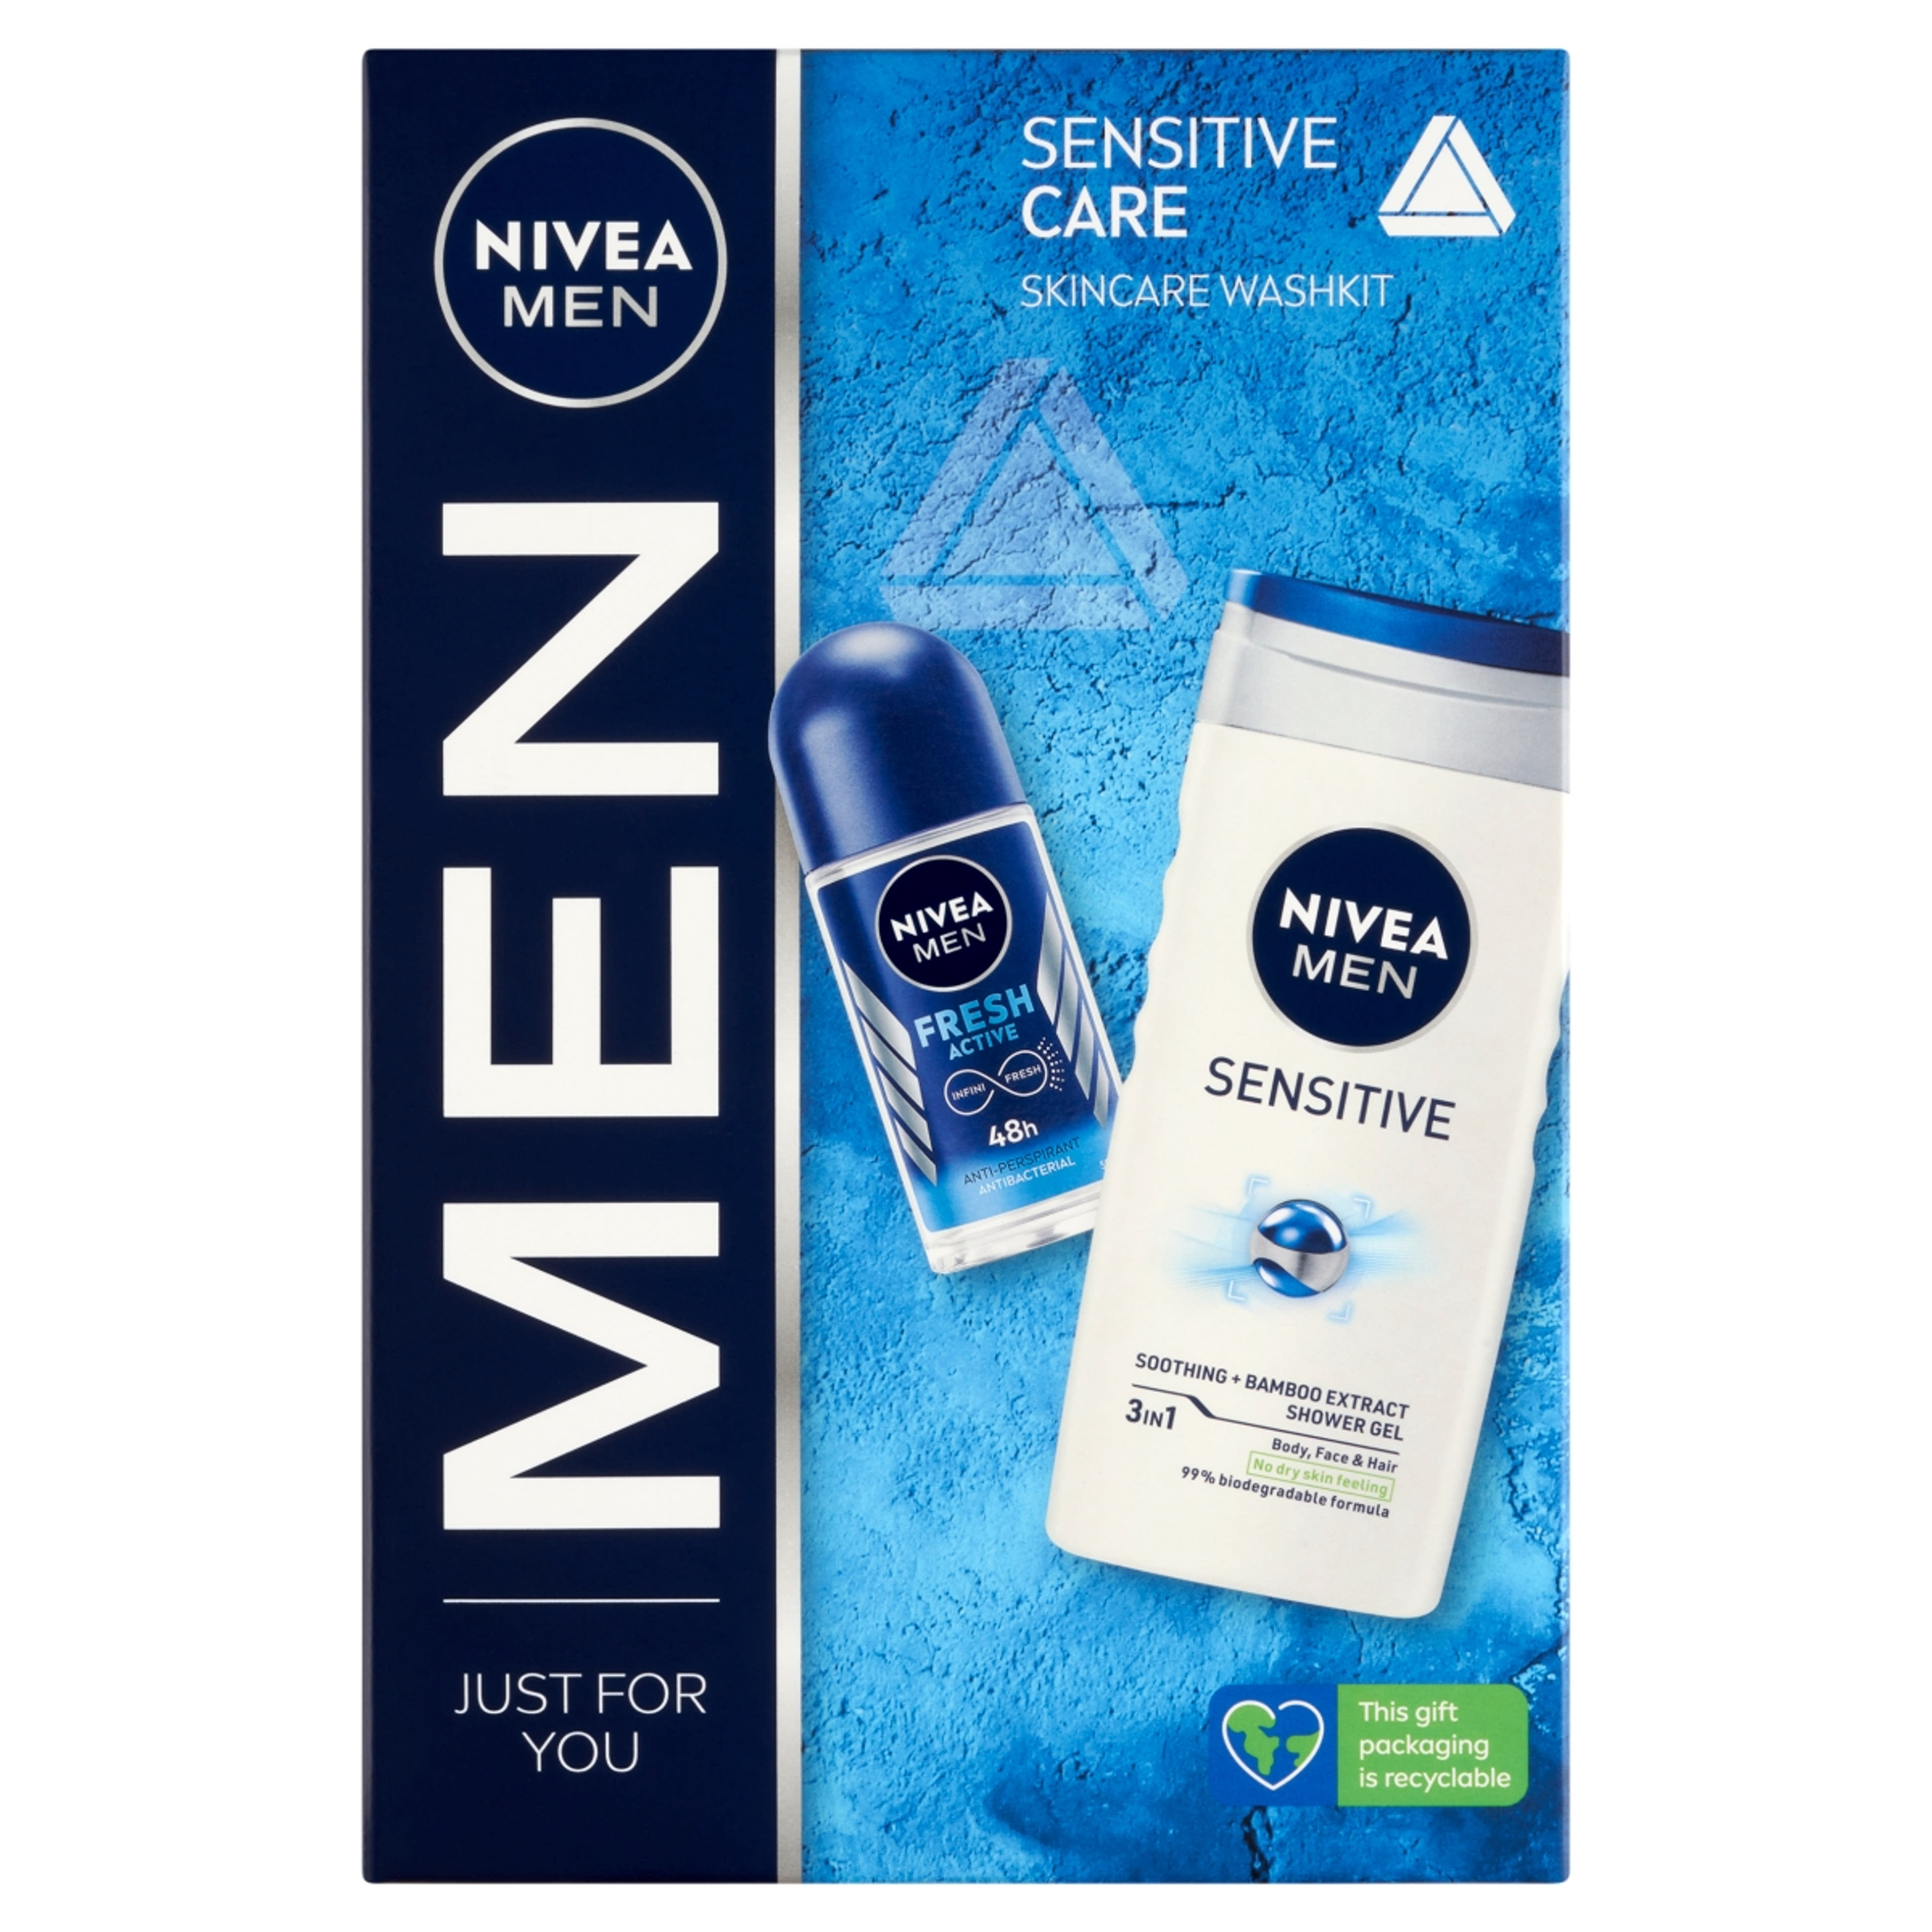 Nivea Men Sensitive Care ajándékcsomag - 1 db-2